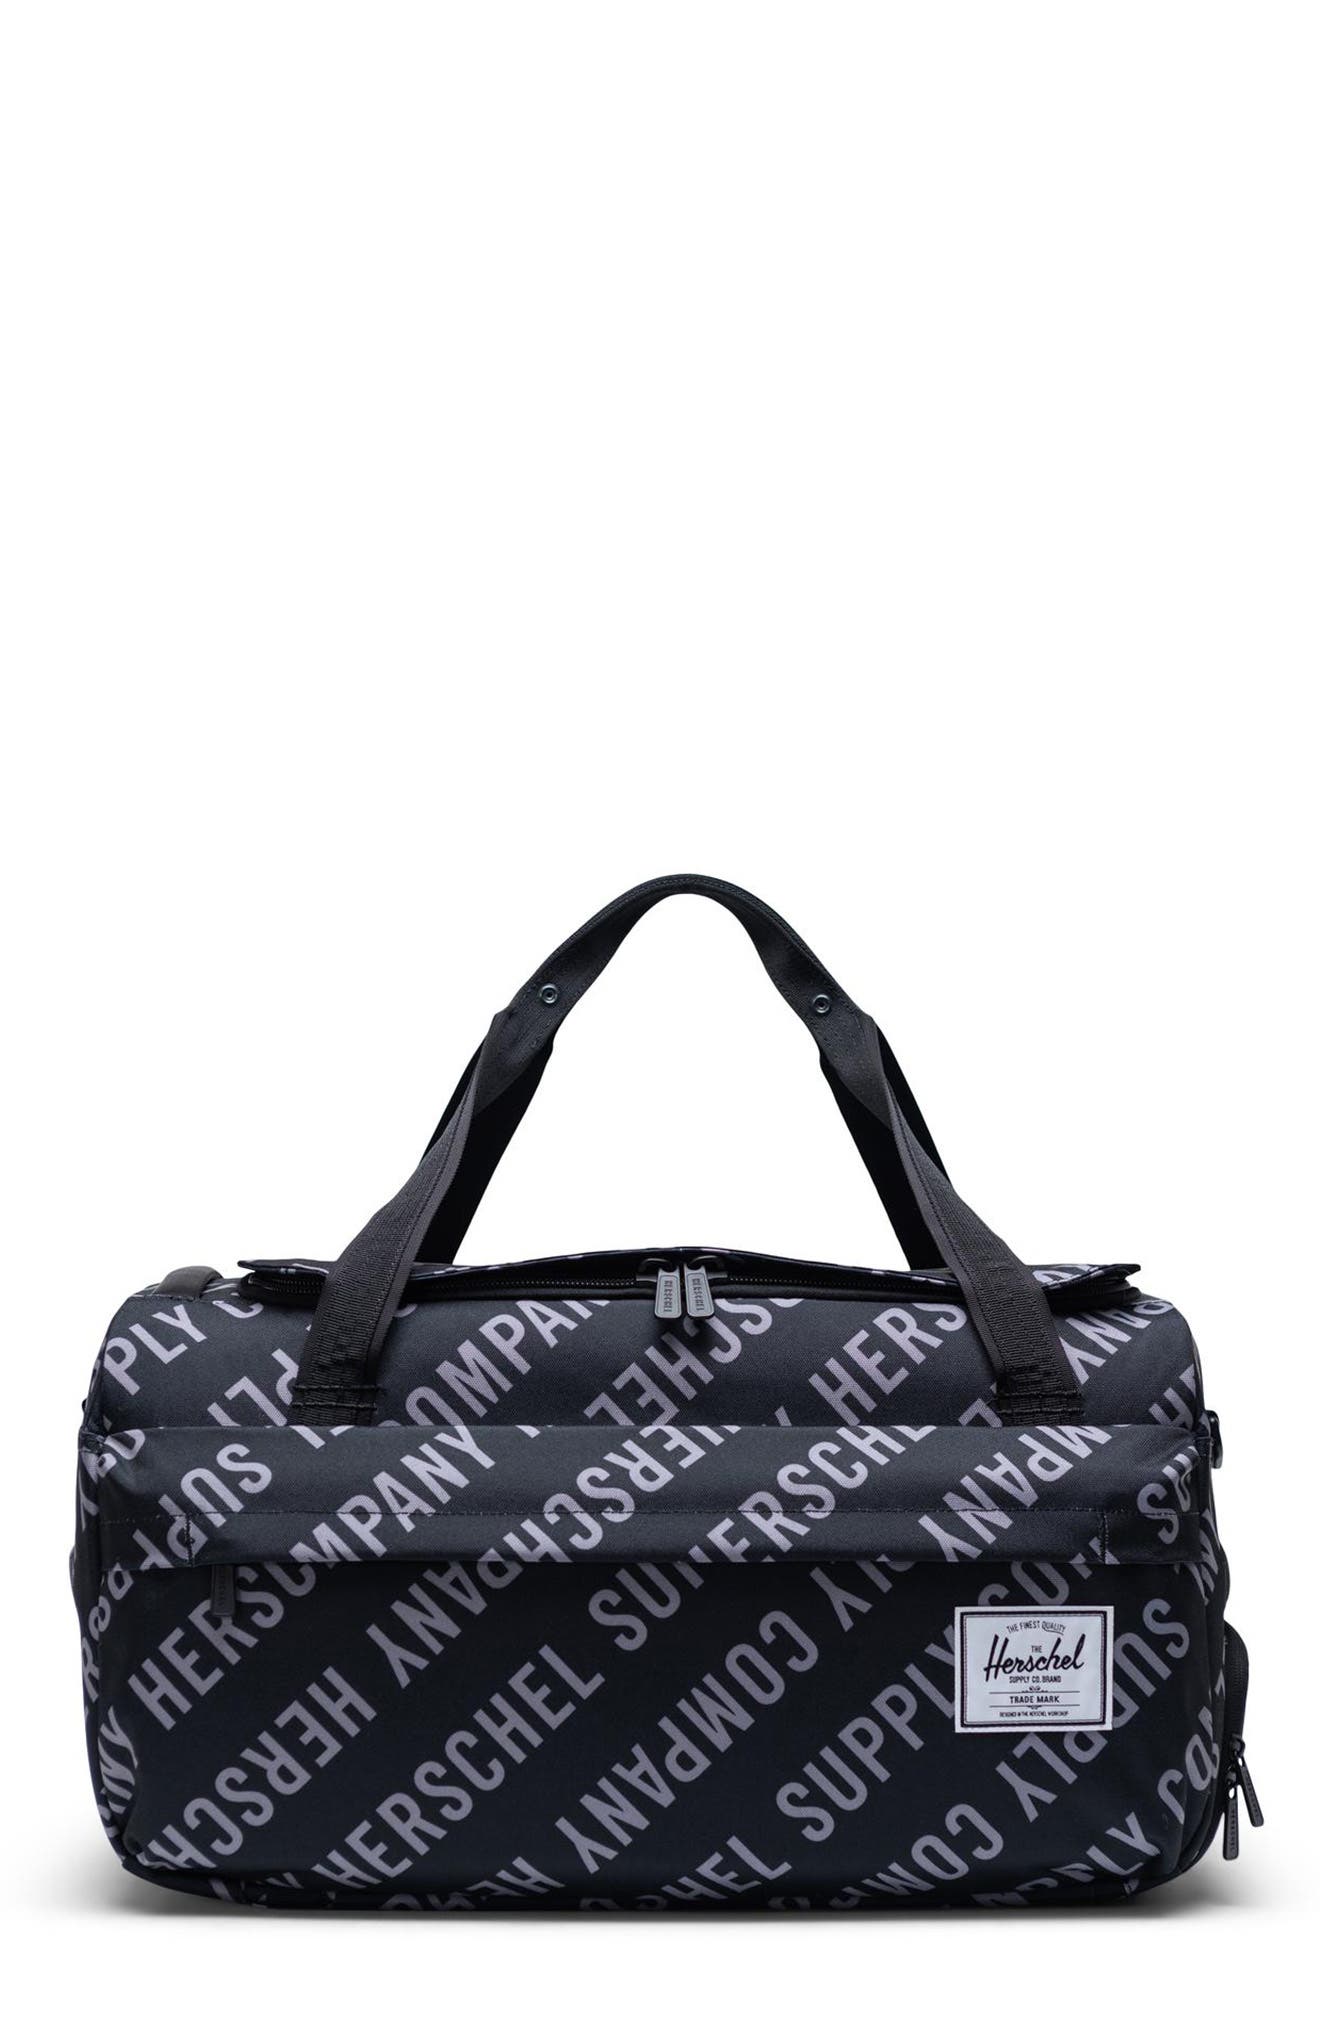 Herschel Supply Co Outfitter Duffel Bag In Rc Blk/ss